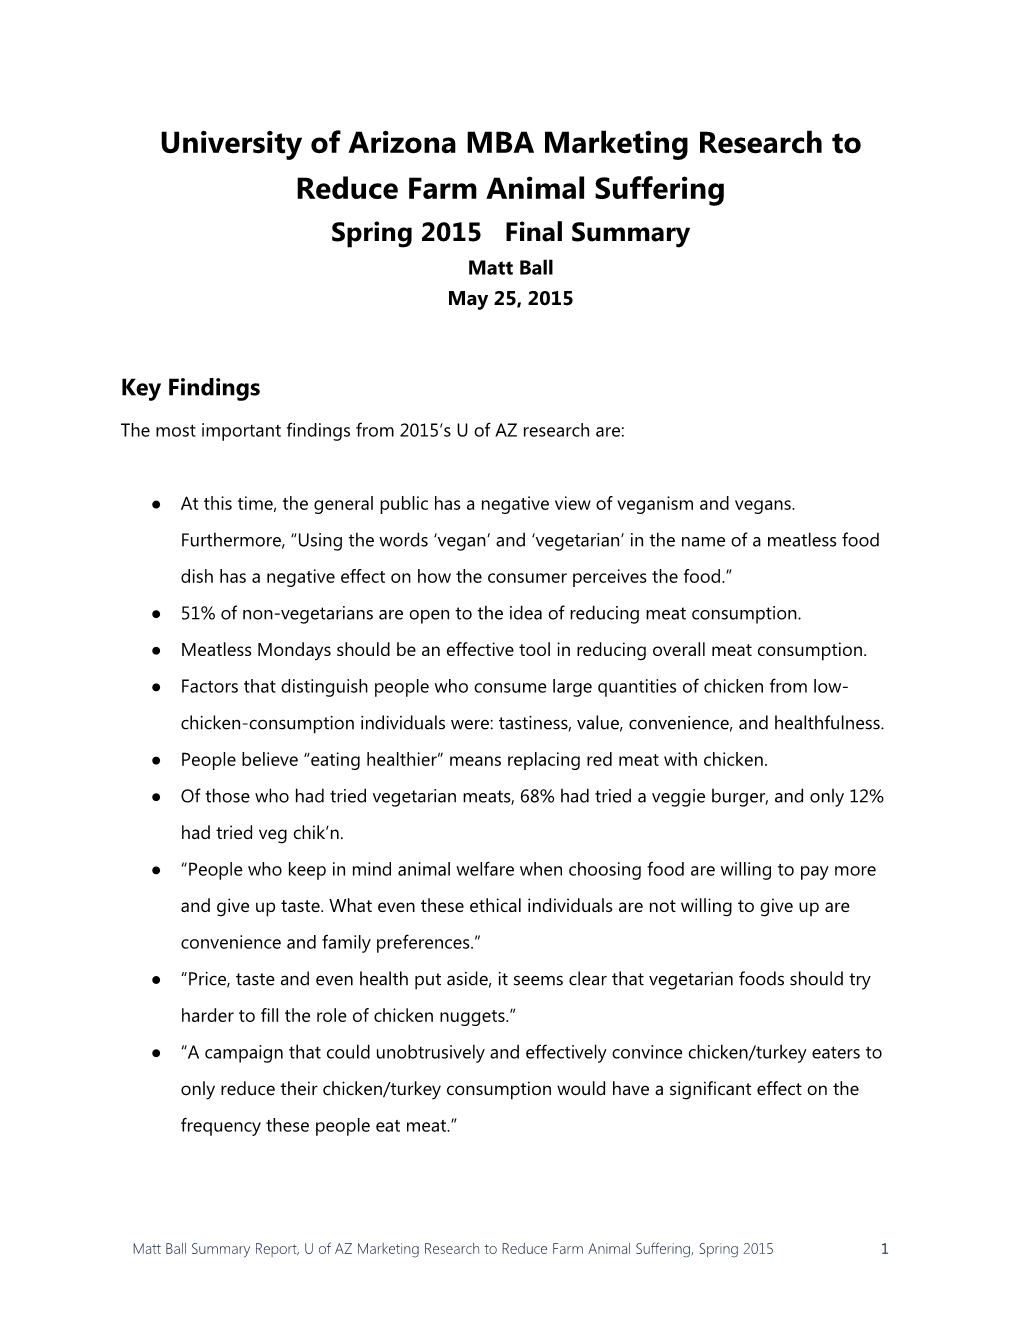 University of Arizona MBA Marketing Research to Reduce Farm Animal Suffering Spring 2015 Final Summary Matt Ball May 25, 2015